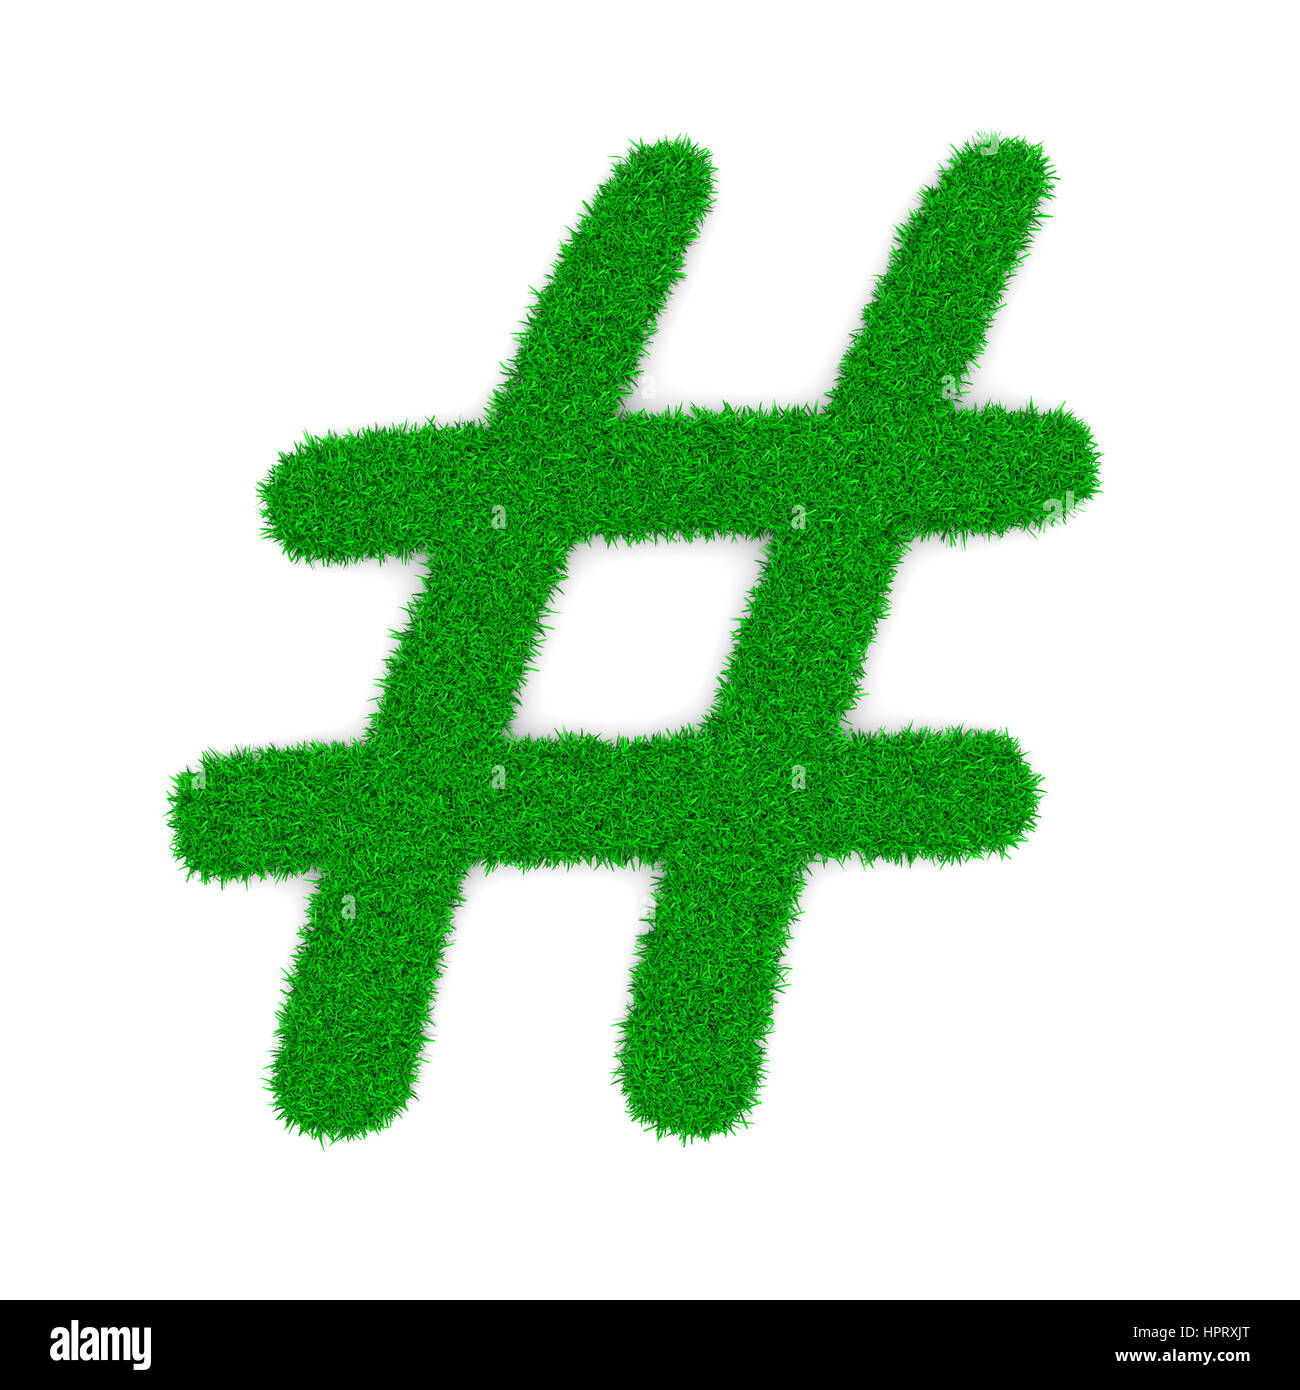 Grass Green Hashtag Symbol Shape on White Background 3D Illustration Stock Photo